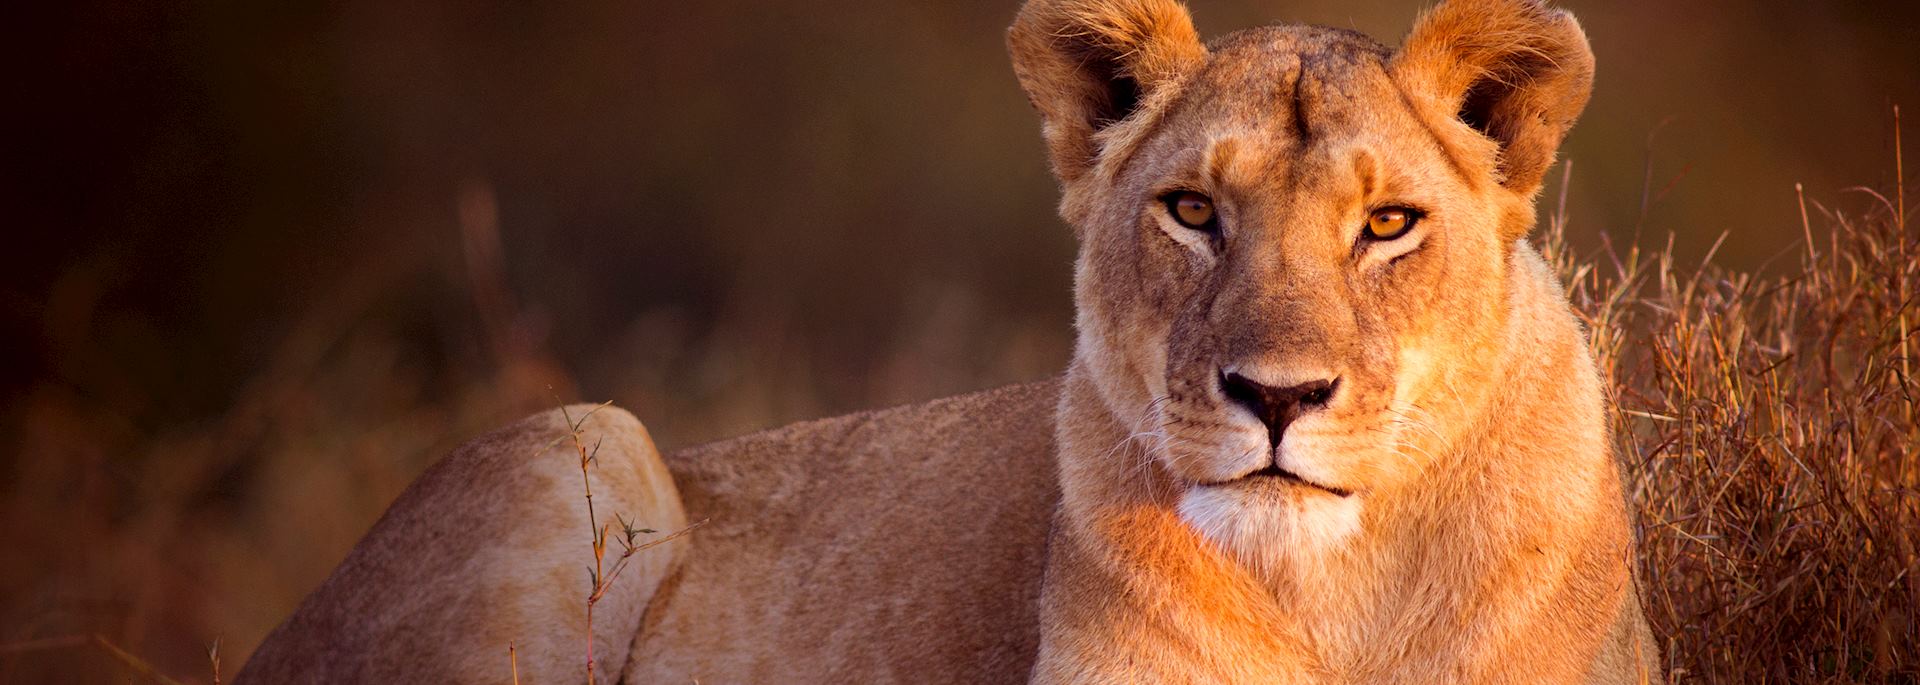 Lioness in the Masai Mara, Kenya